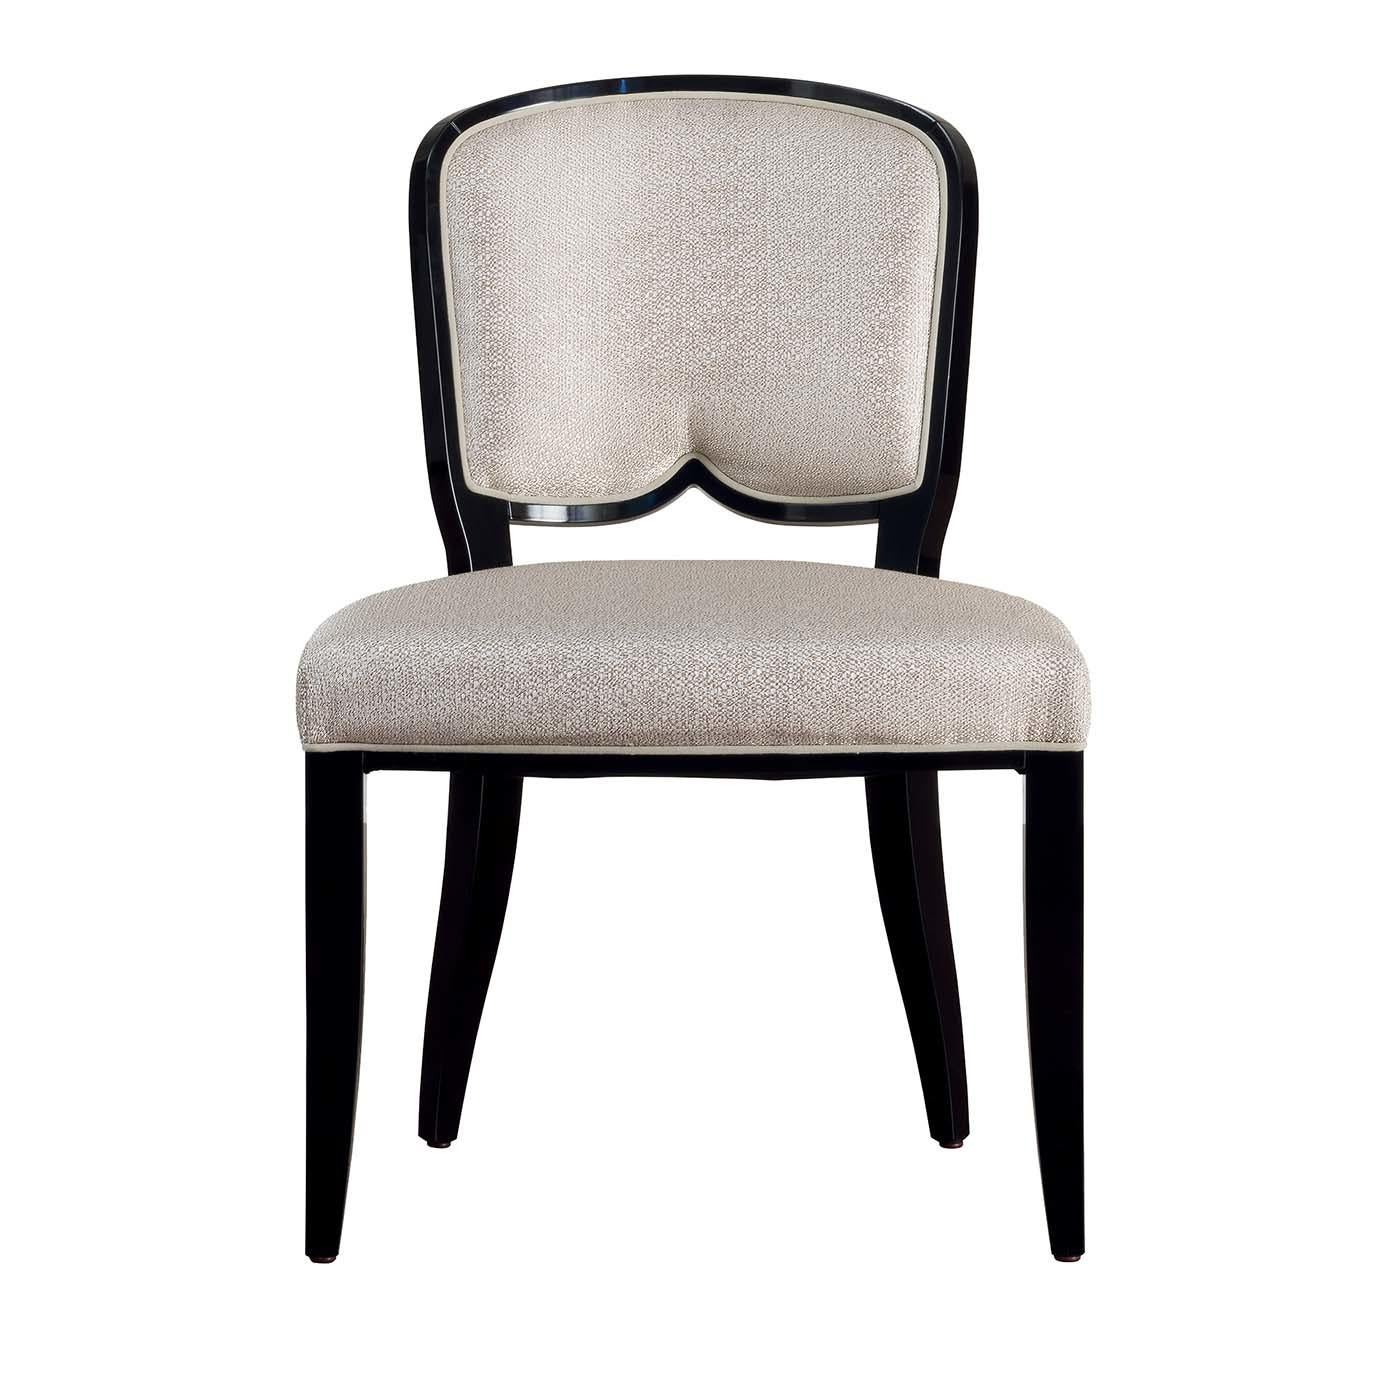 Gemma Black and White Chair